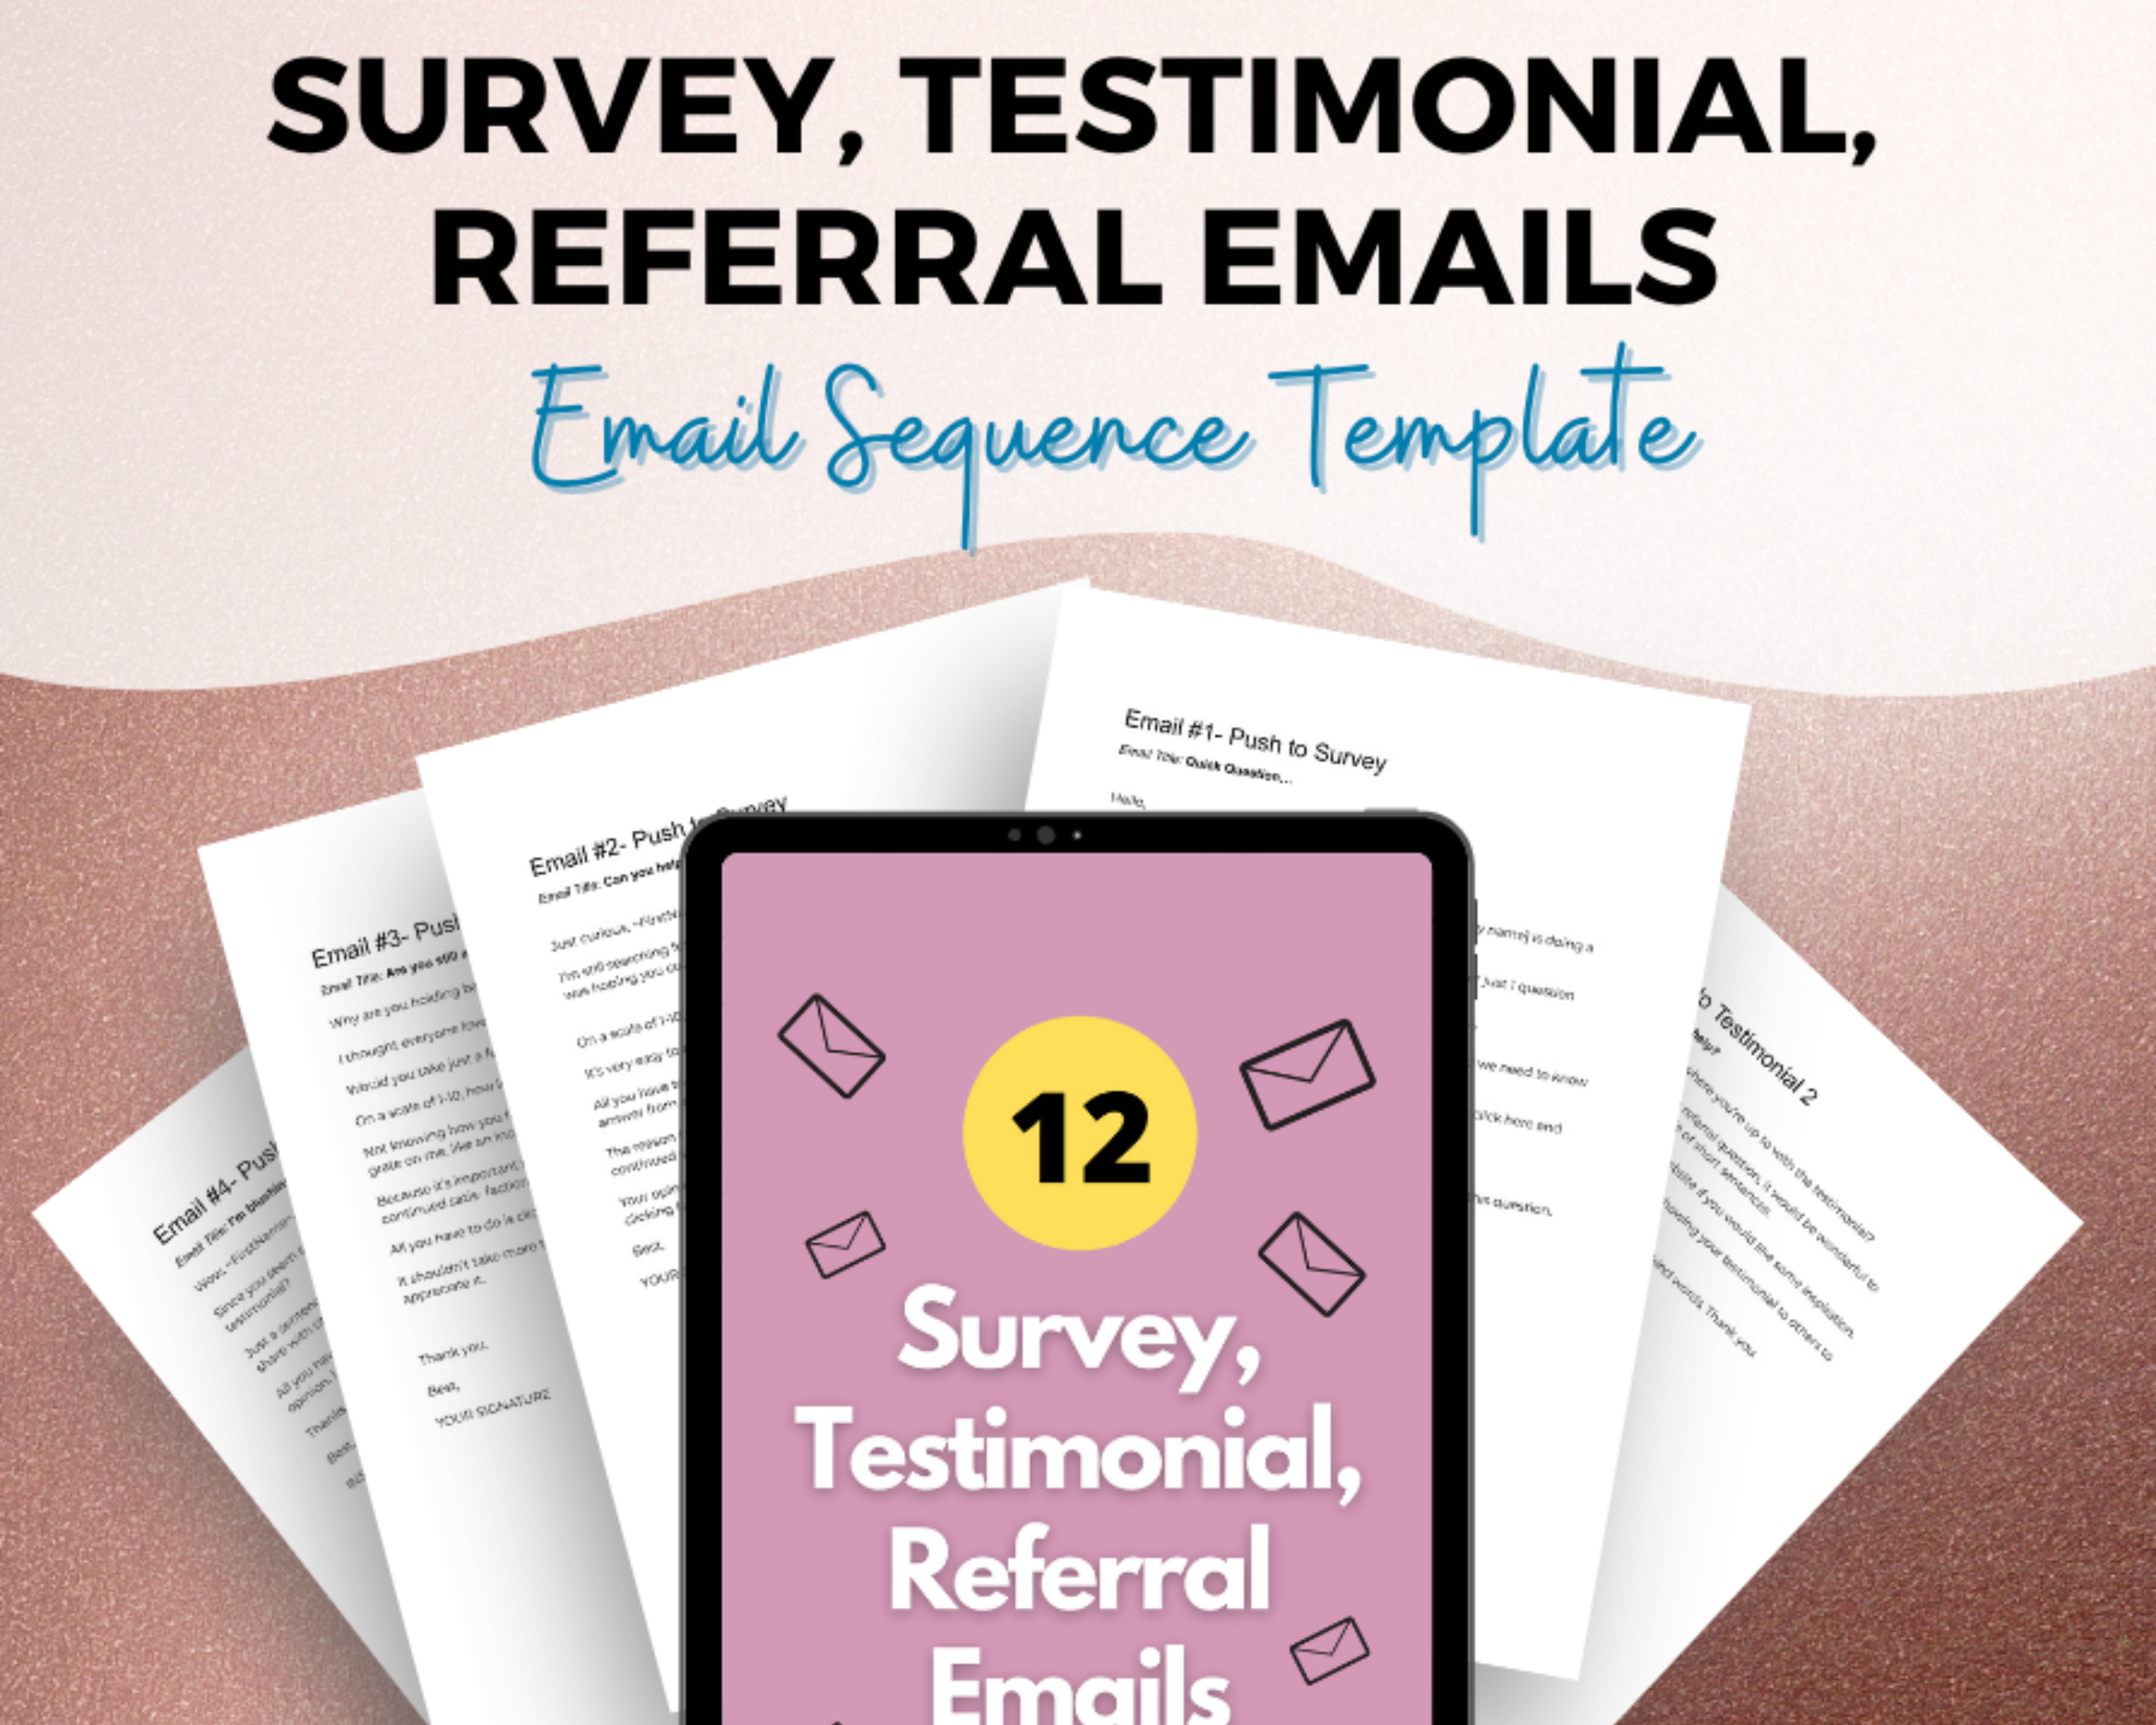 Survey, Testimonial, Referral Emails